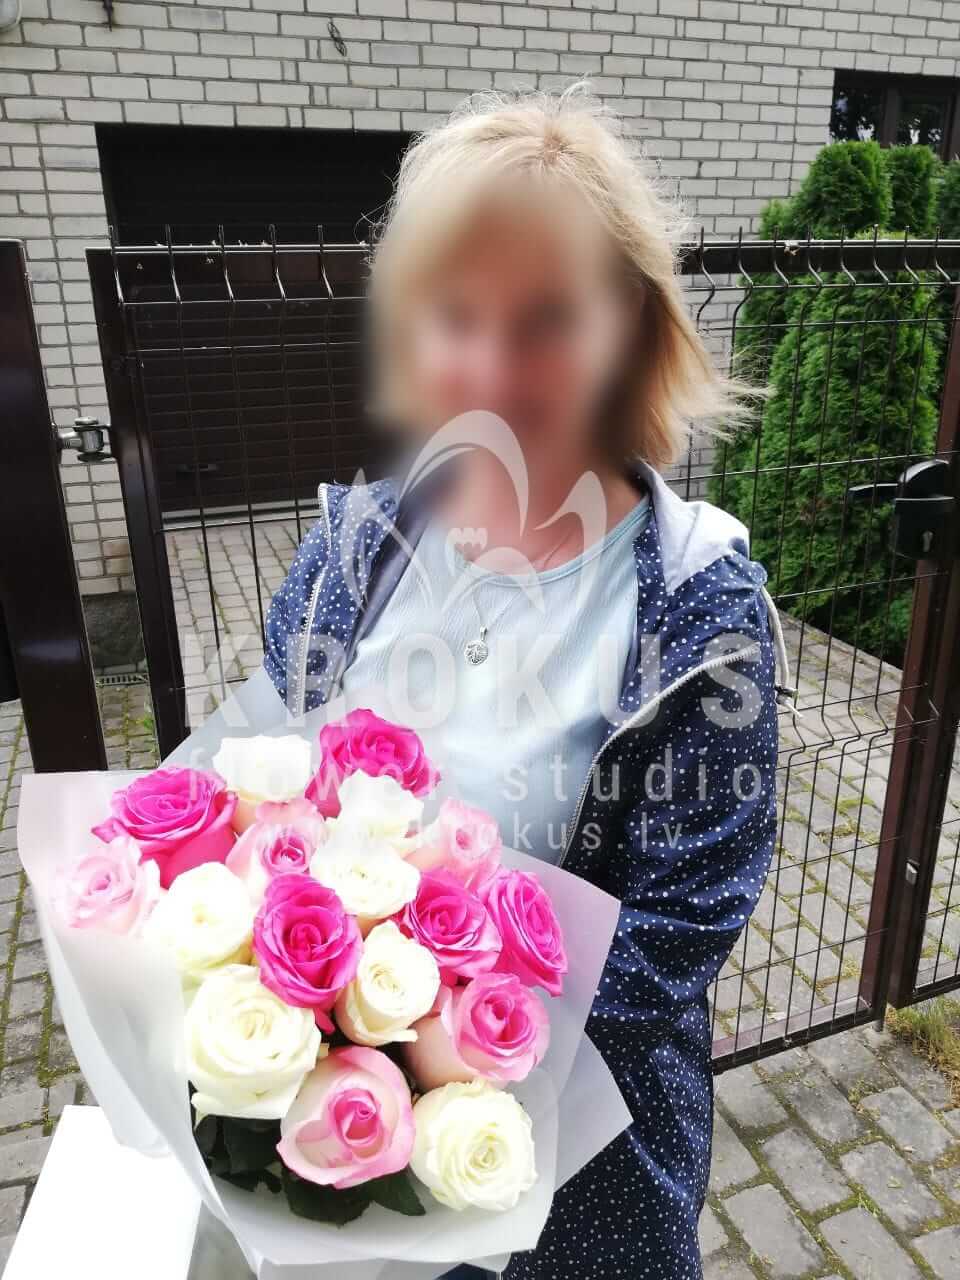 Deliver flowers to Ogre (pink roseswhite rosesorange rosesred rosesyellow roses)